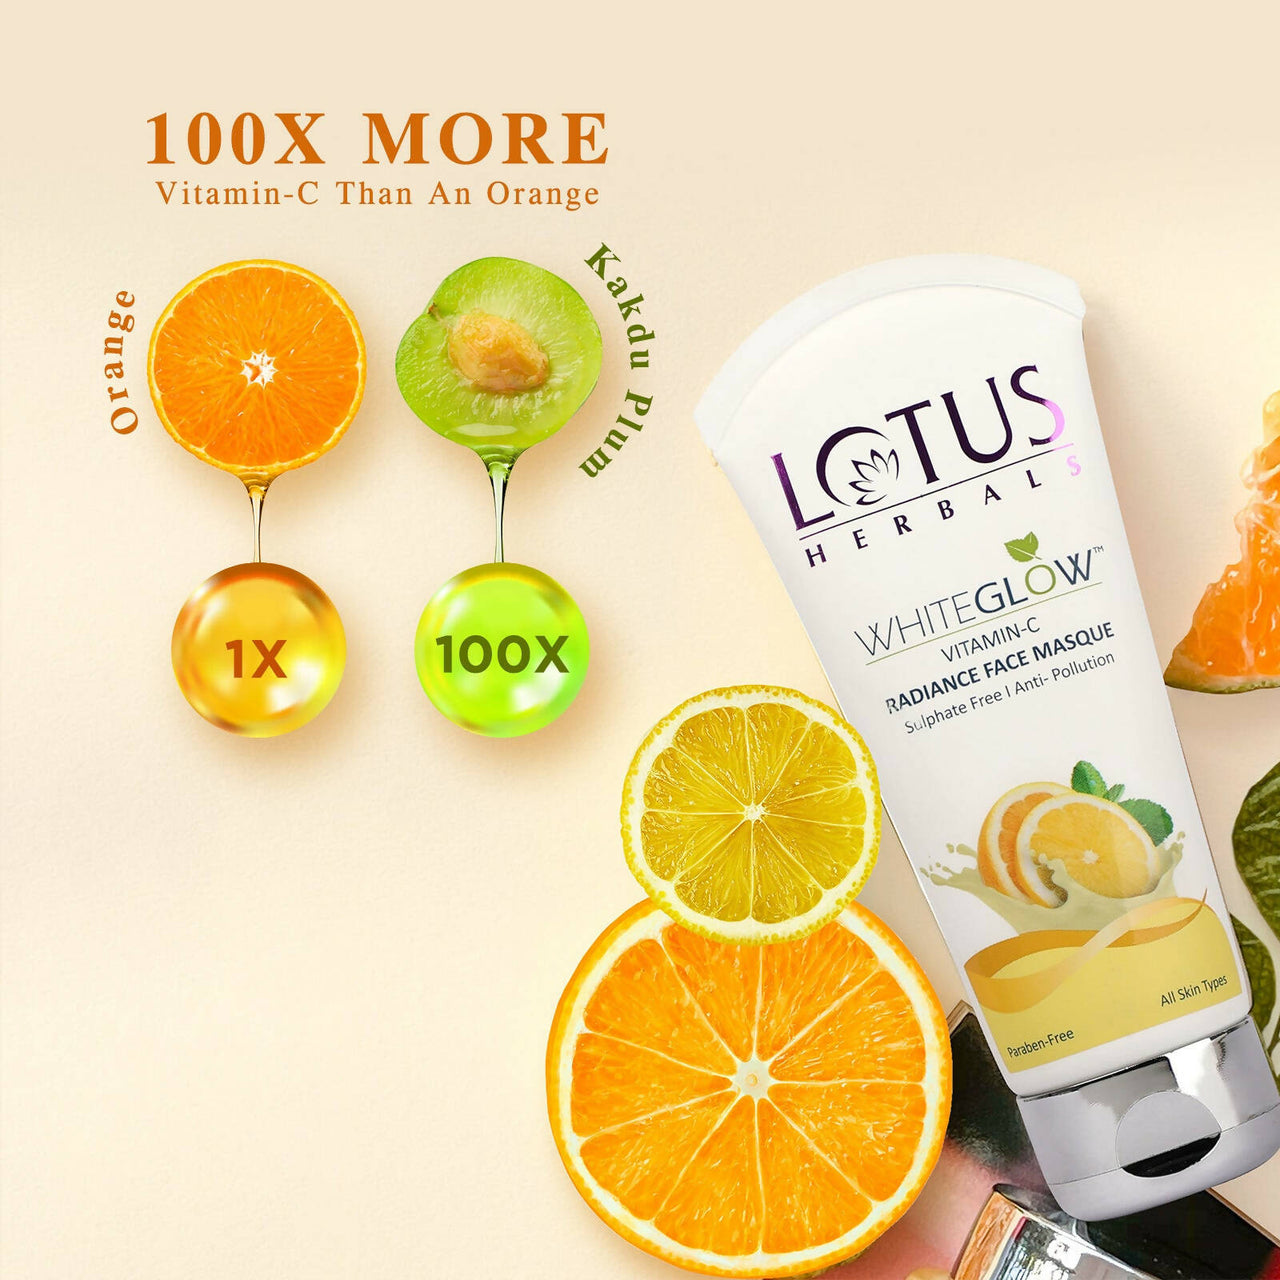 Lotus Herbals WhiteGlow Vitamin-C Radiance Fack Masque - Distacart